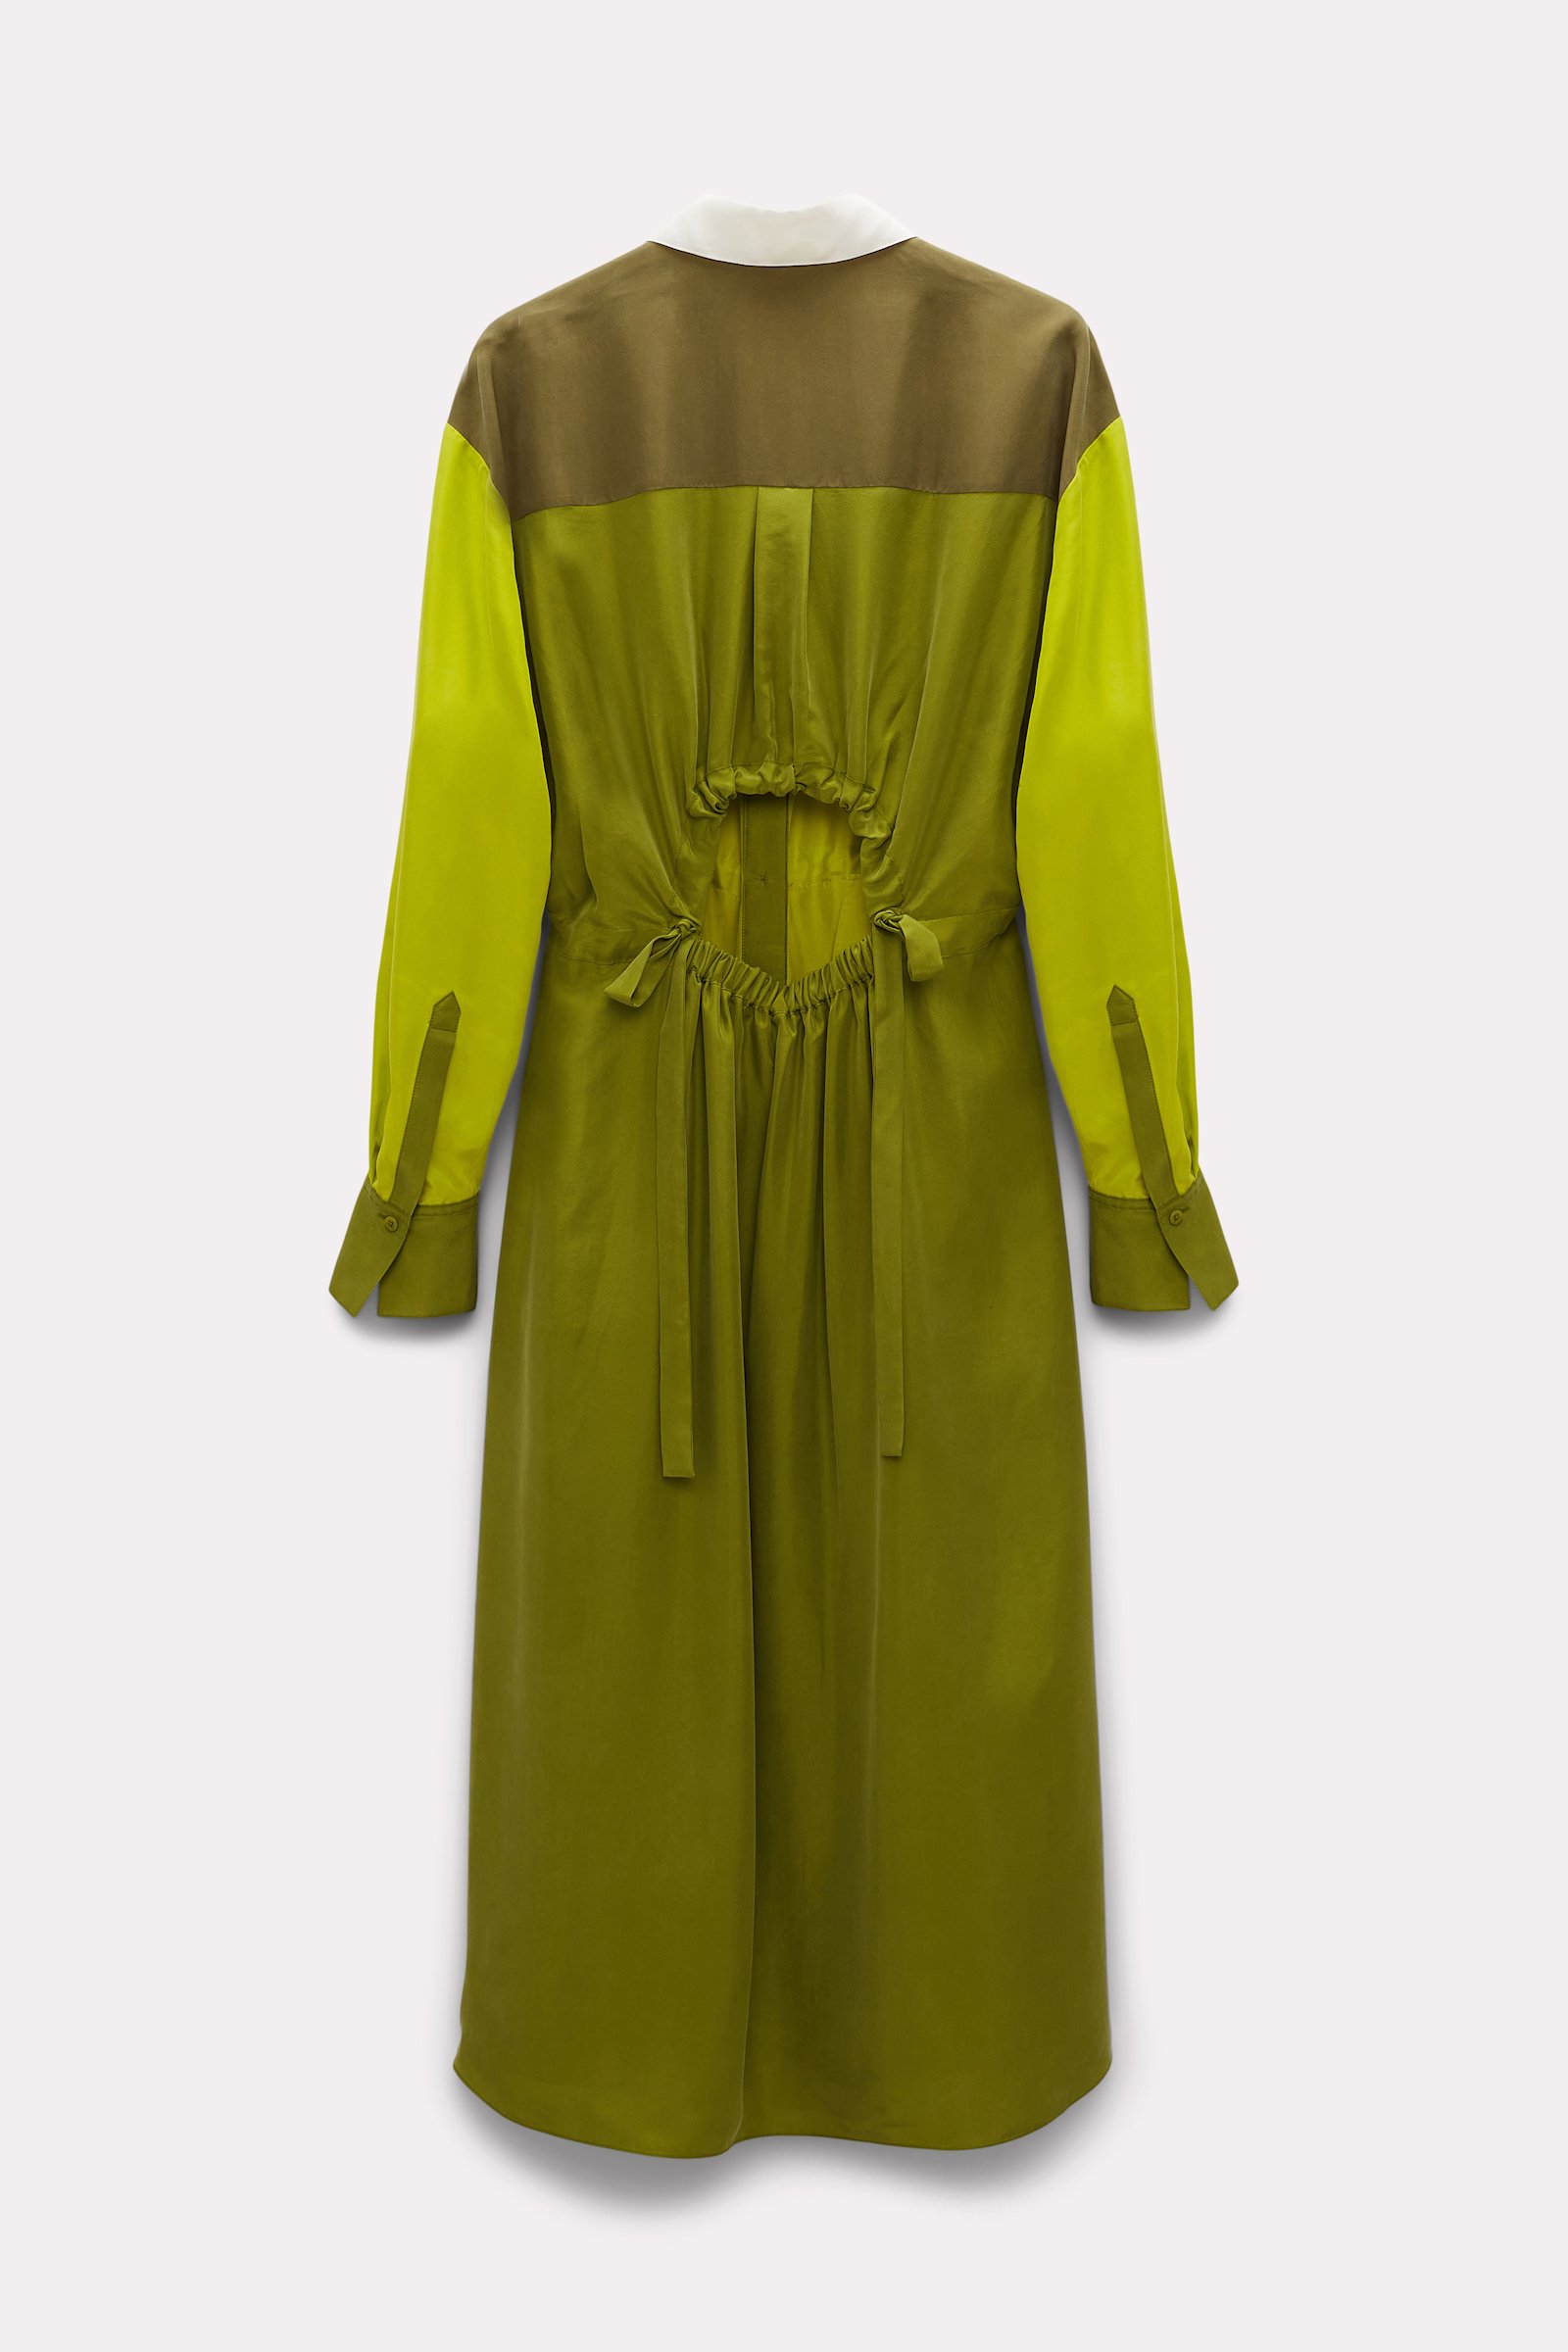 Dorothee Schumacher Washed silk colorblock shirtdress green mix